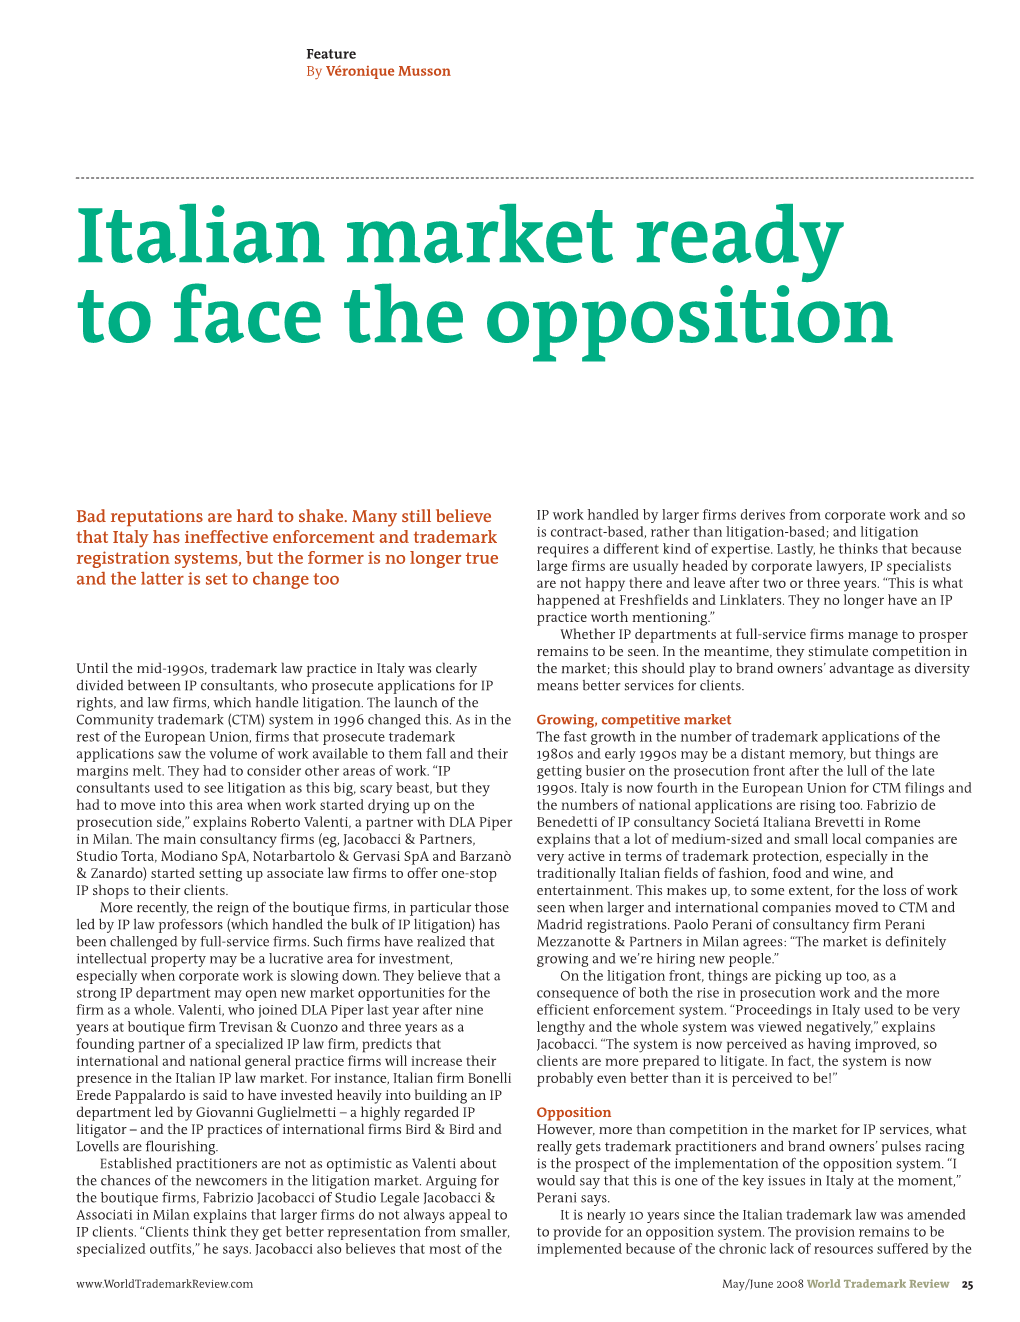 Italian Market Ready to Face the Opposition